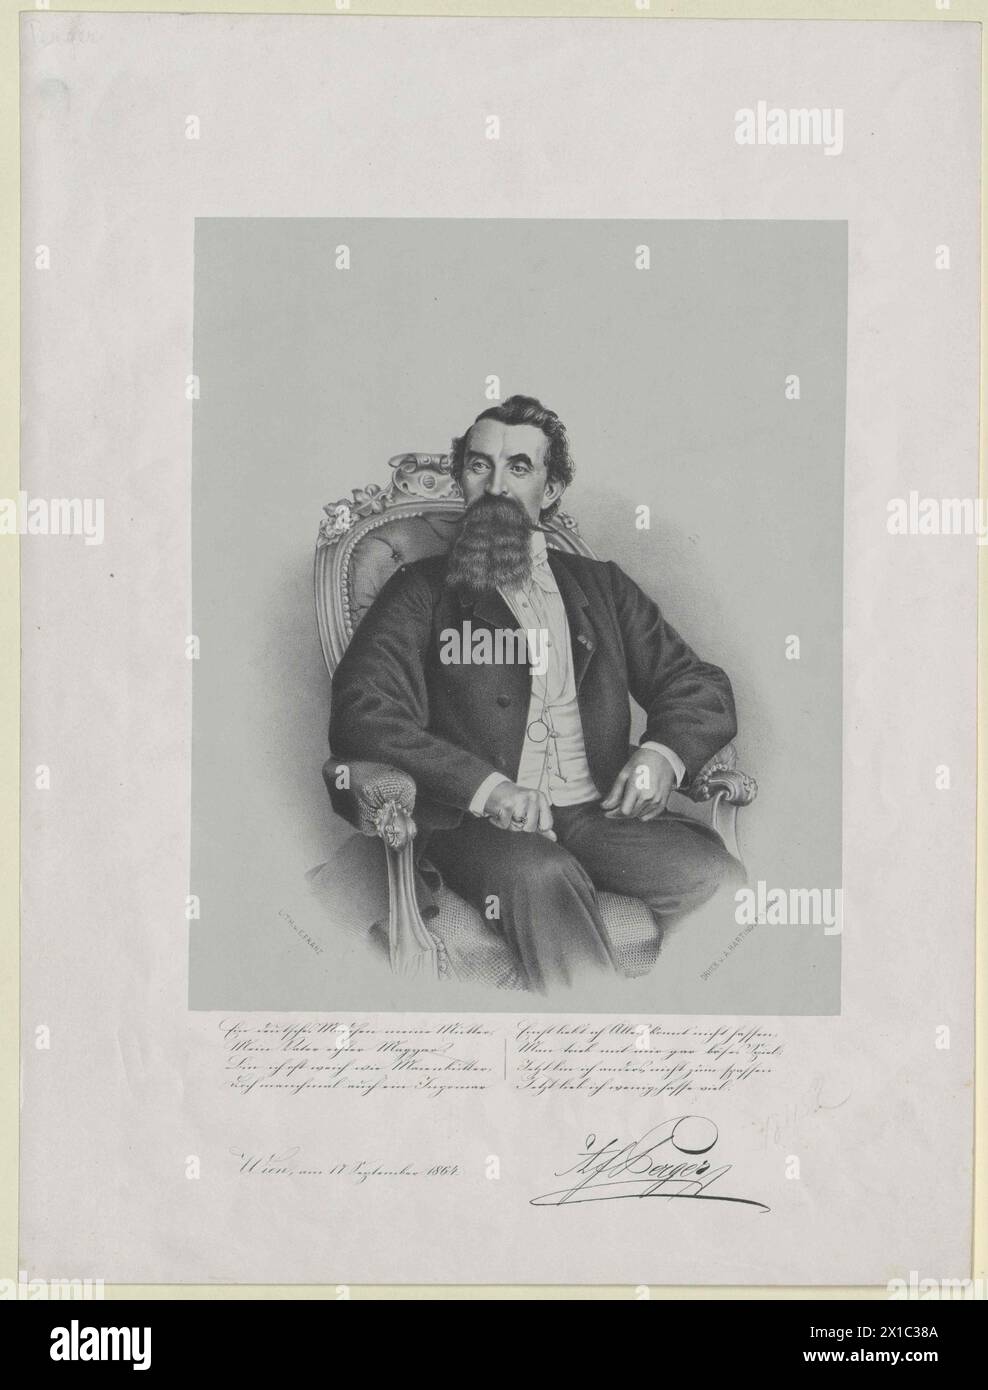 Perger, Aloysius Franz, lebte um 1872, - 19830422 PD24549 - Rechteinfo: Rights Managed (RM) Stockfoto